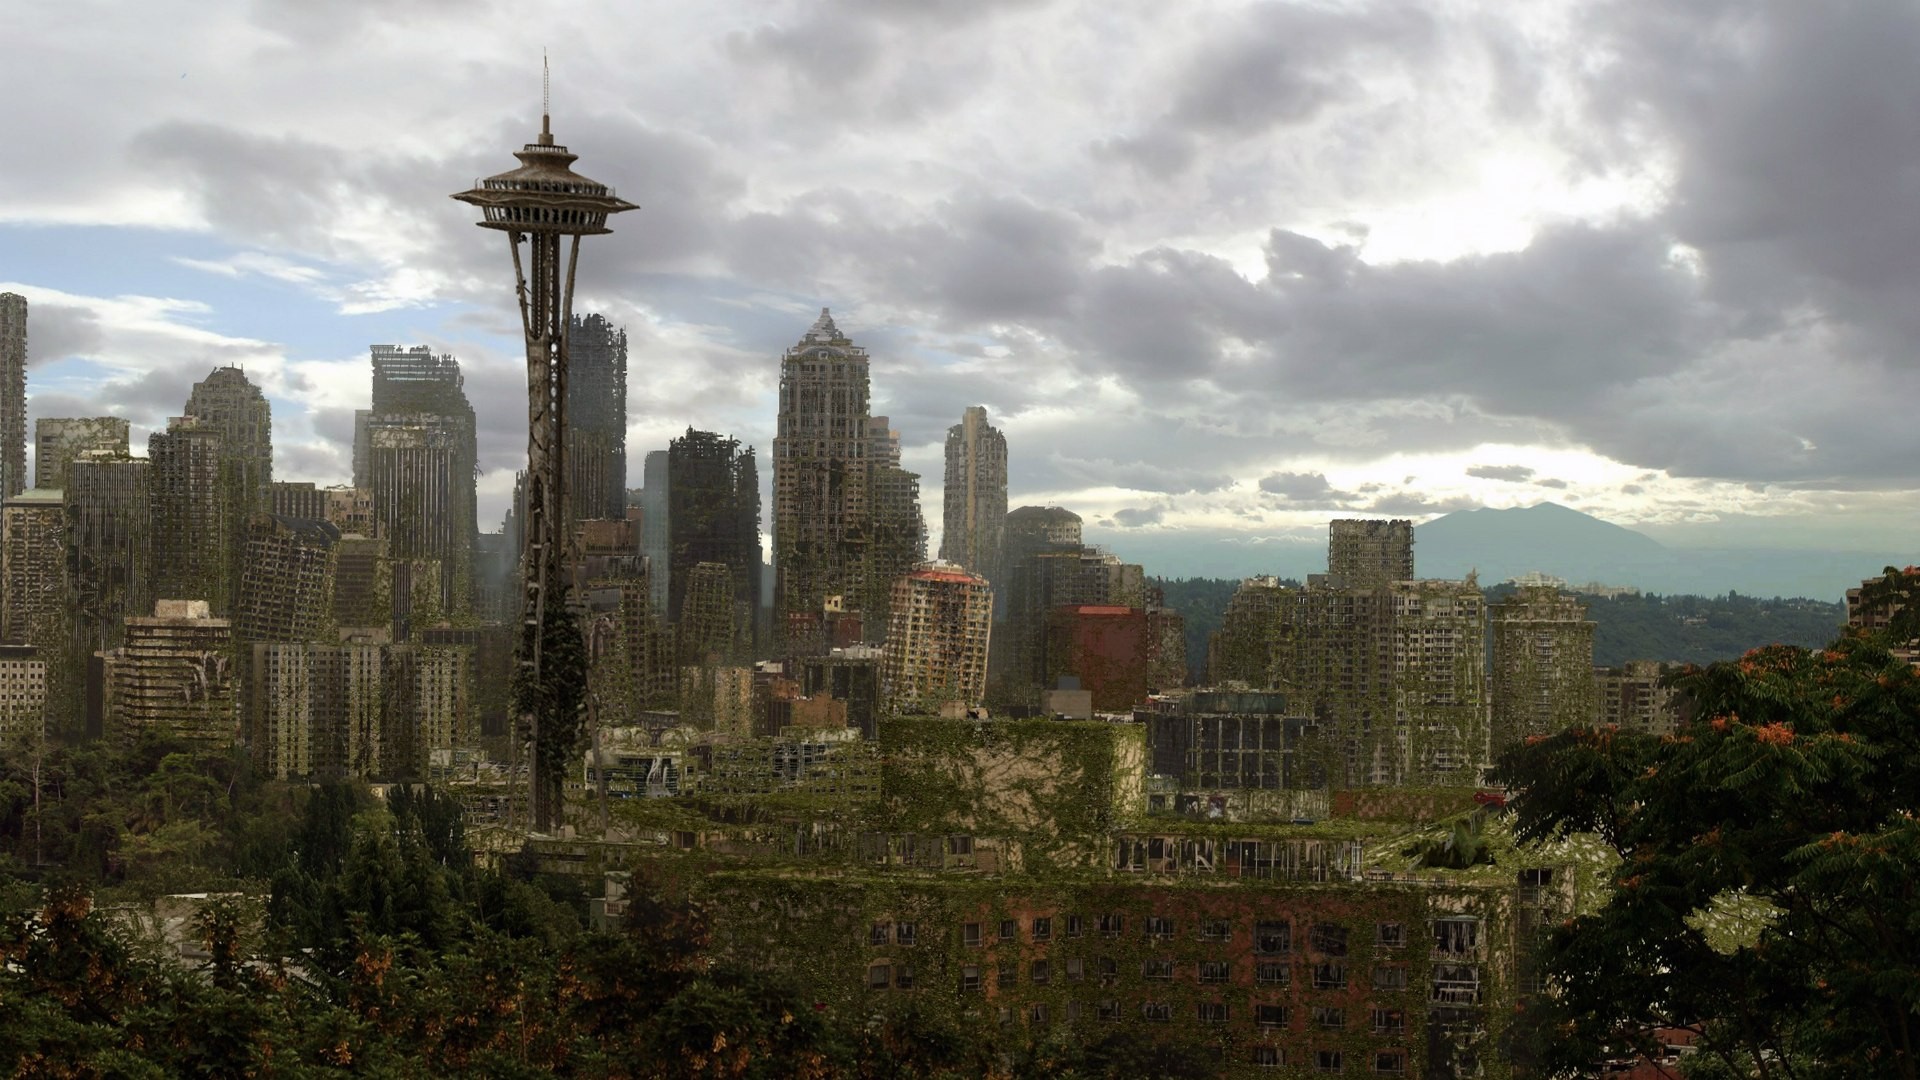 General 1920x1080 apocalyptic futuristic digital art cityscape ruins